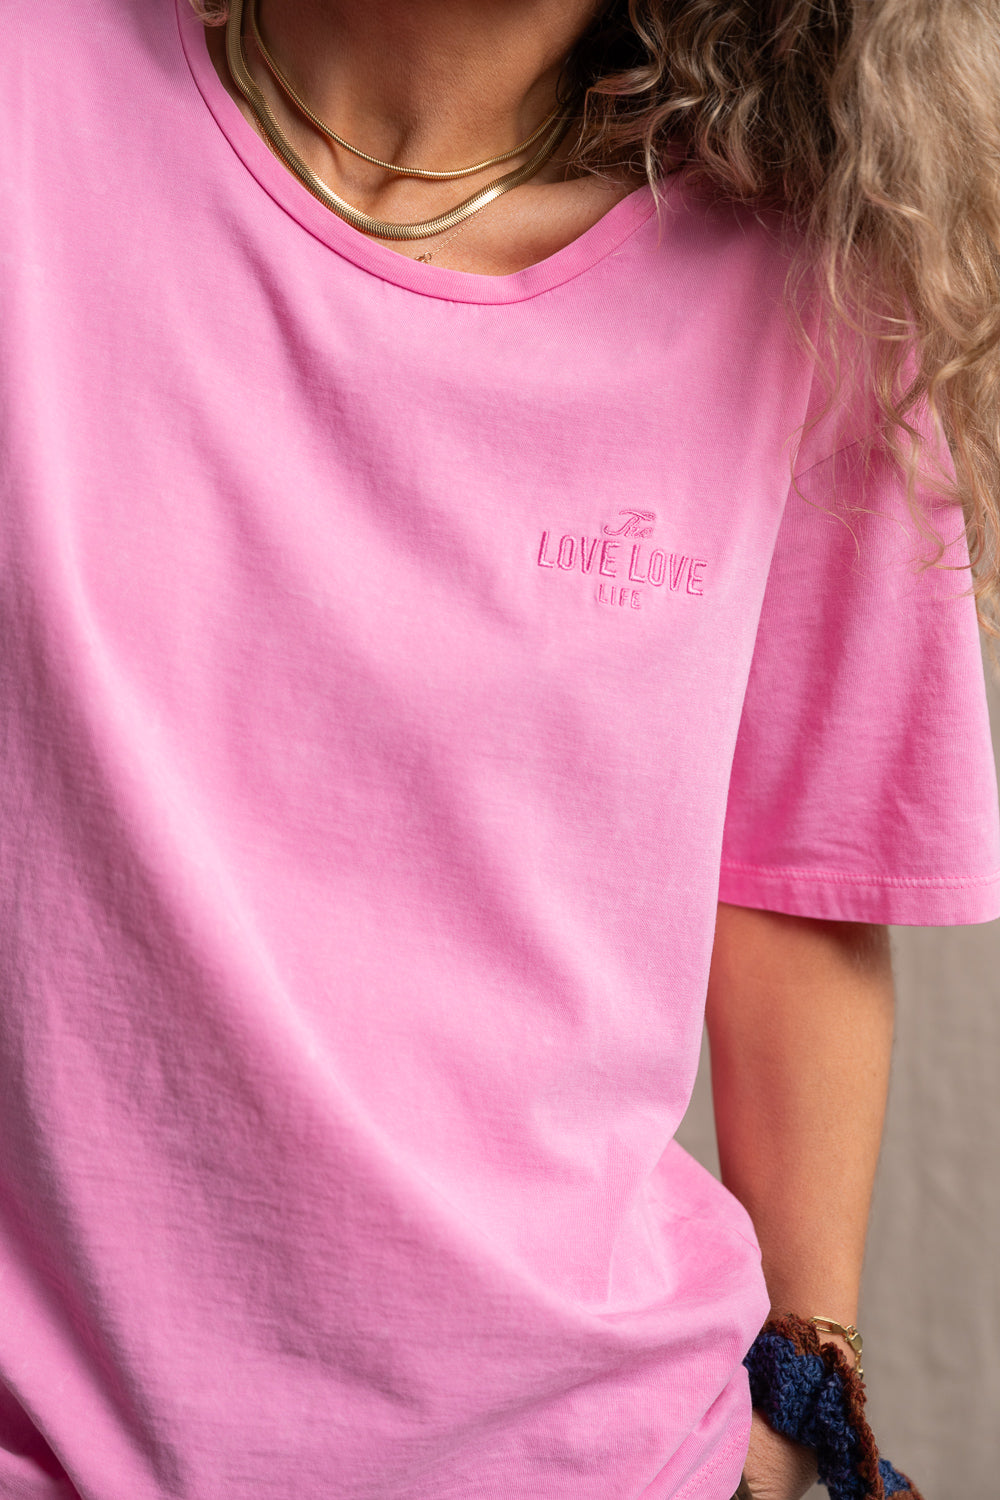 T-shirt Tan Candy Pink